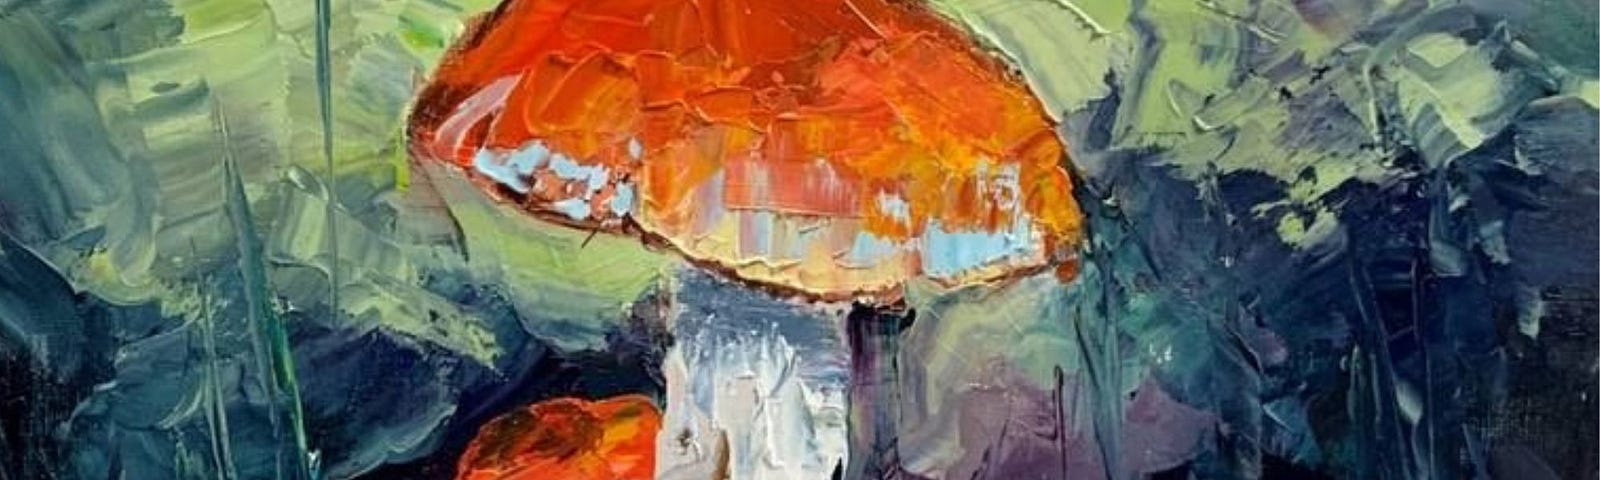 Painting of Mushroom by Vita Schagen